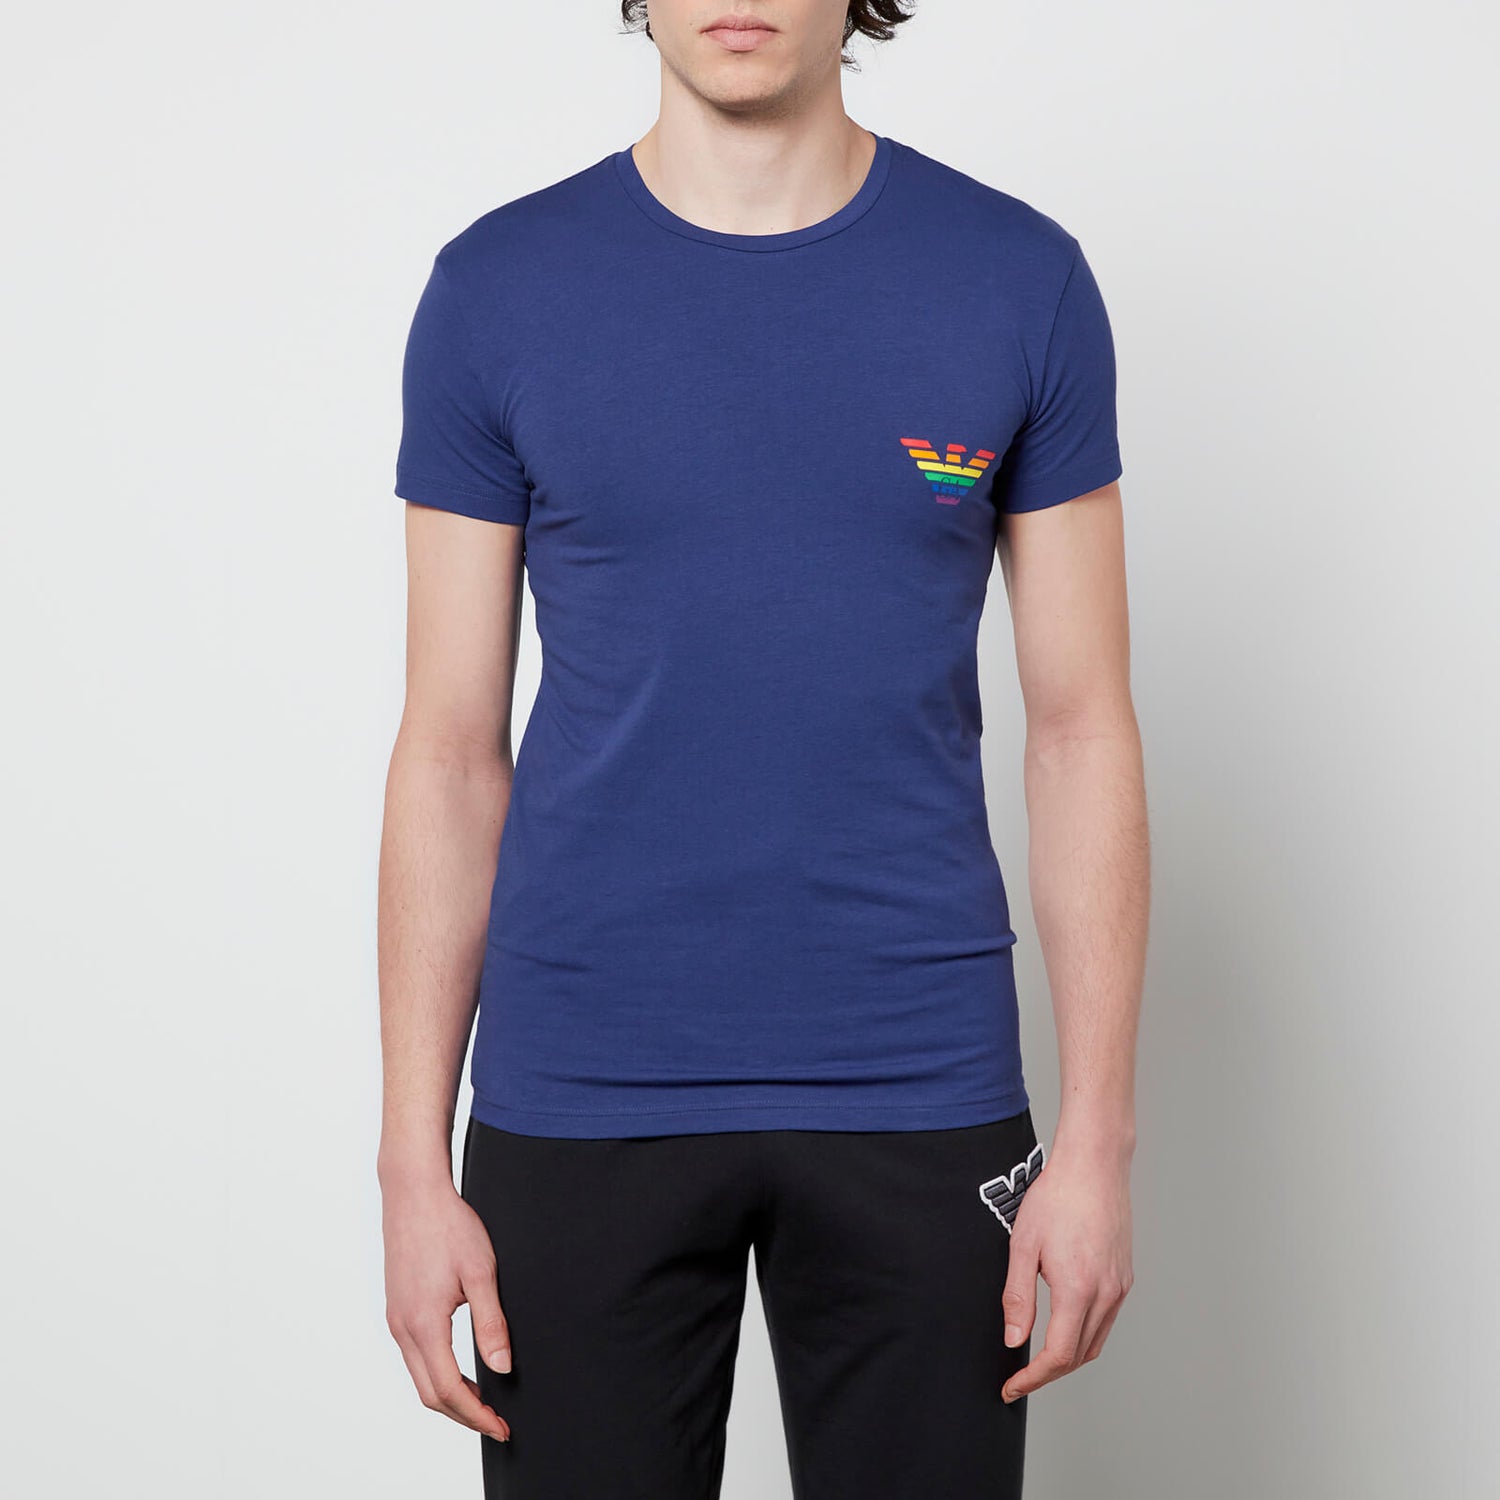 Emporio Armani Men's Rainbow T-Shirt - Patriot Blue - S